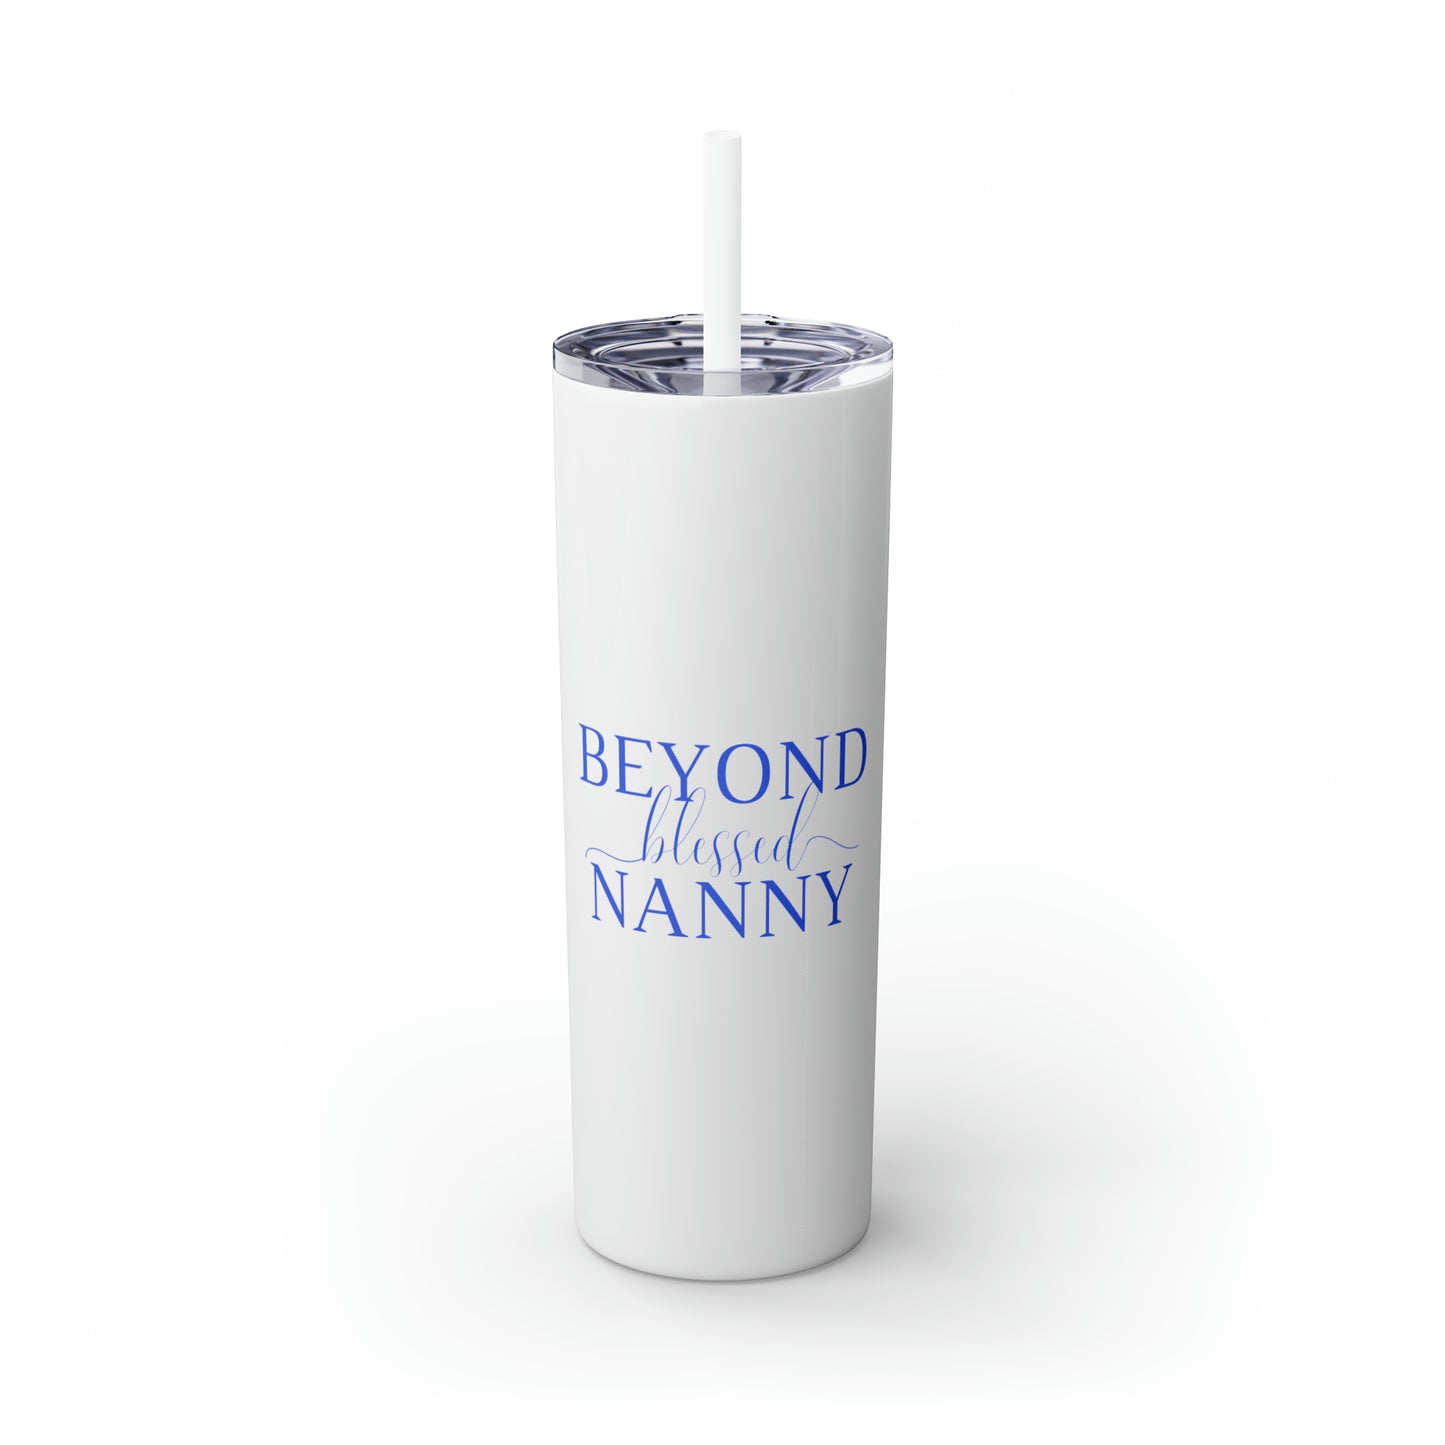 Beyond Blessed Nanny - Plain Skinny Tumbler with Straw, 20oz